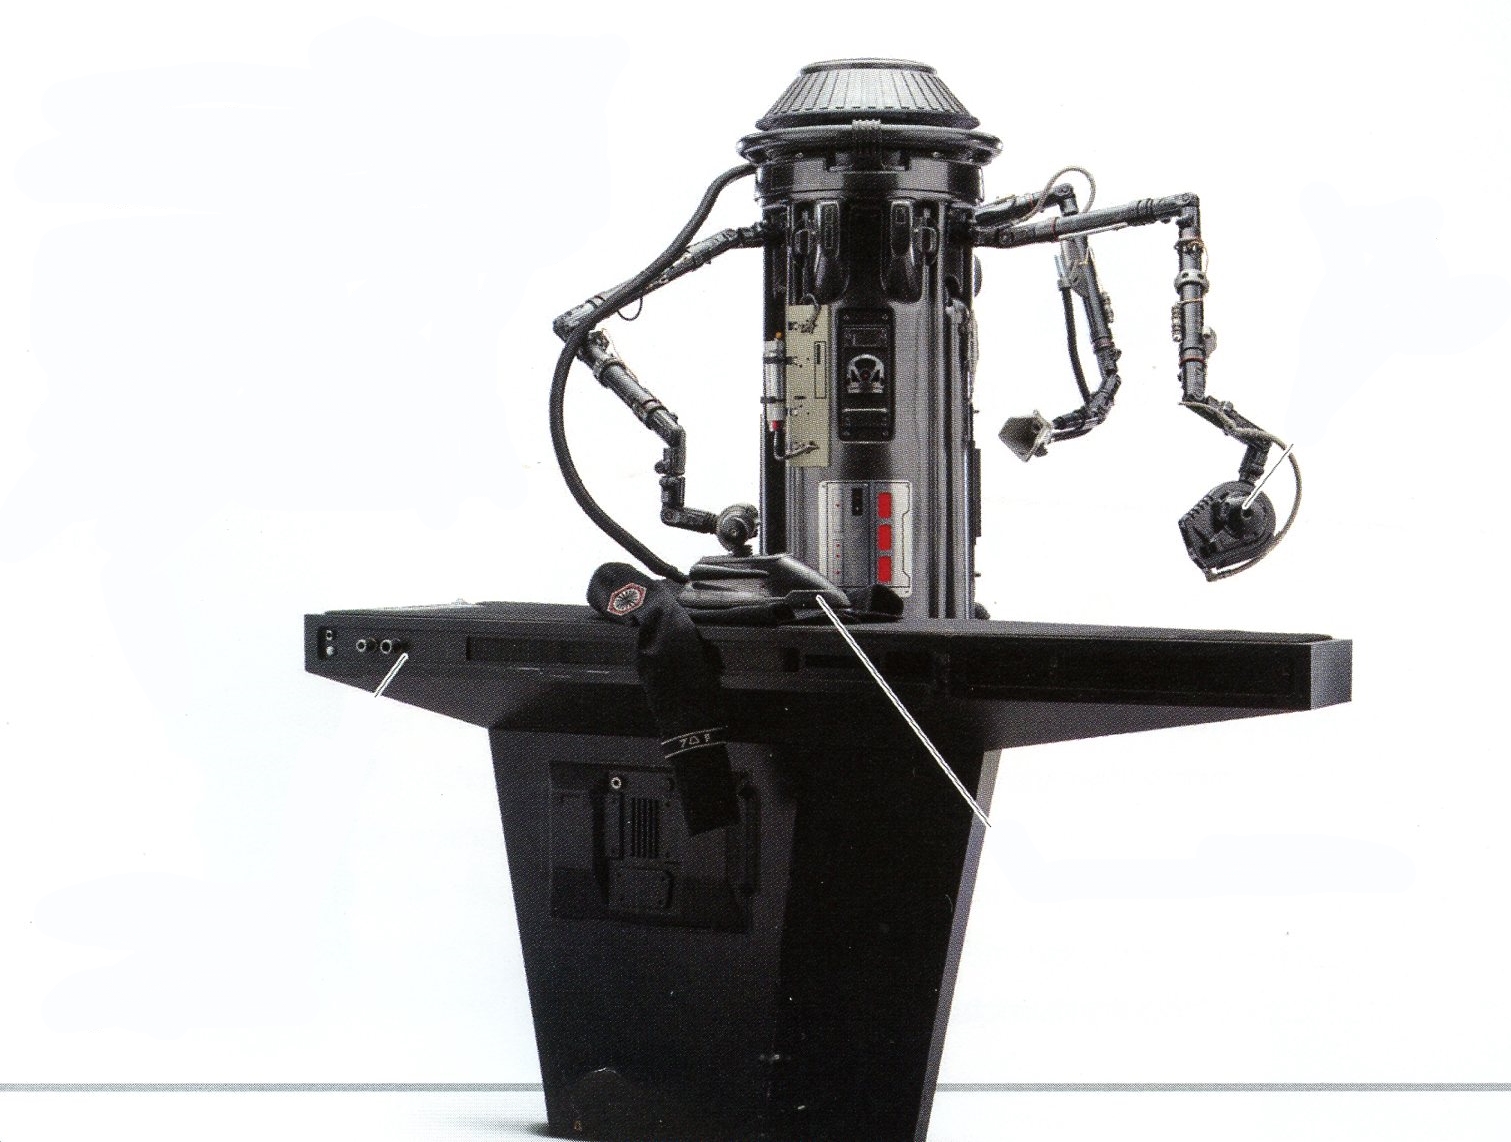 Serv-O-Droid, Inc. S0-1P autovalet droid